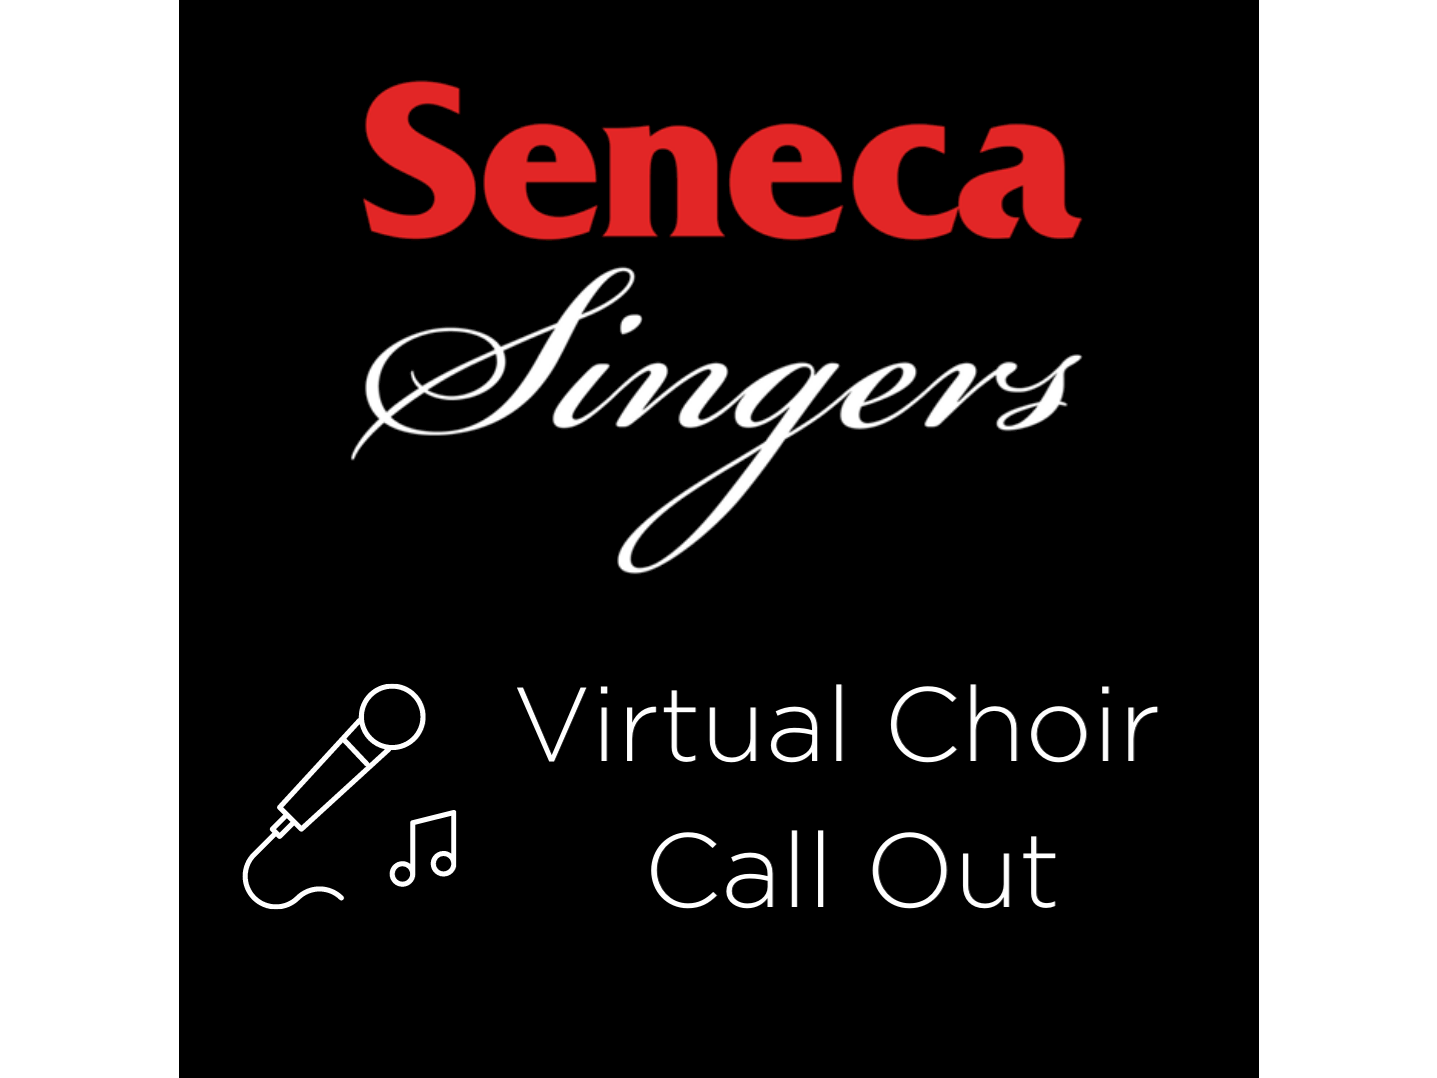 The Seneca Singers are seeking voices